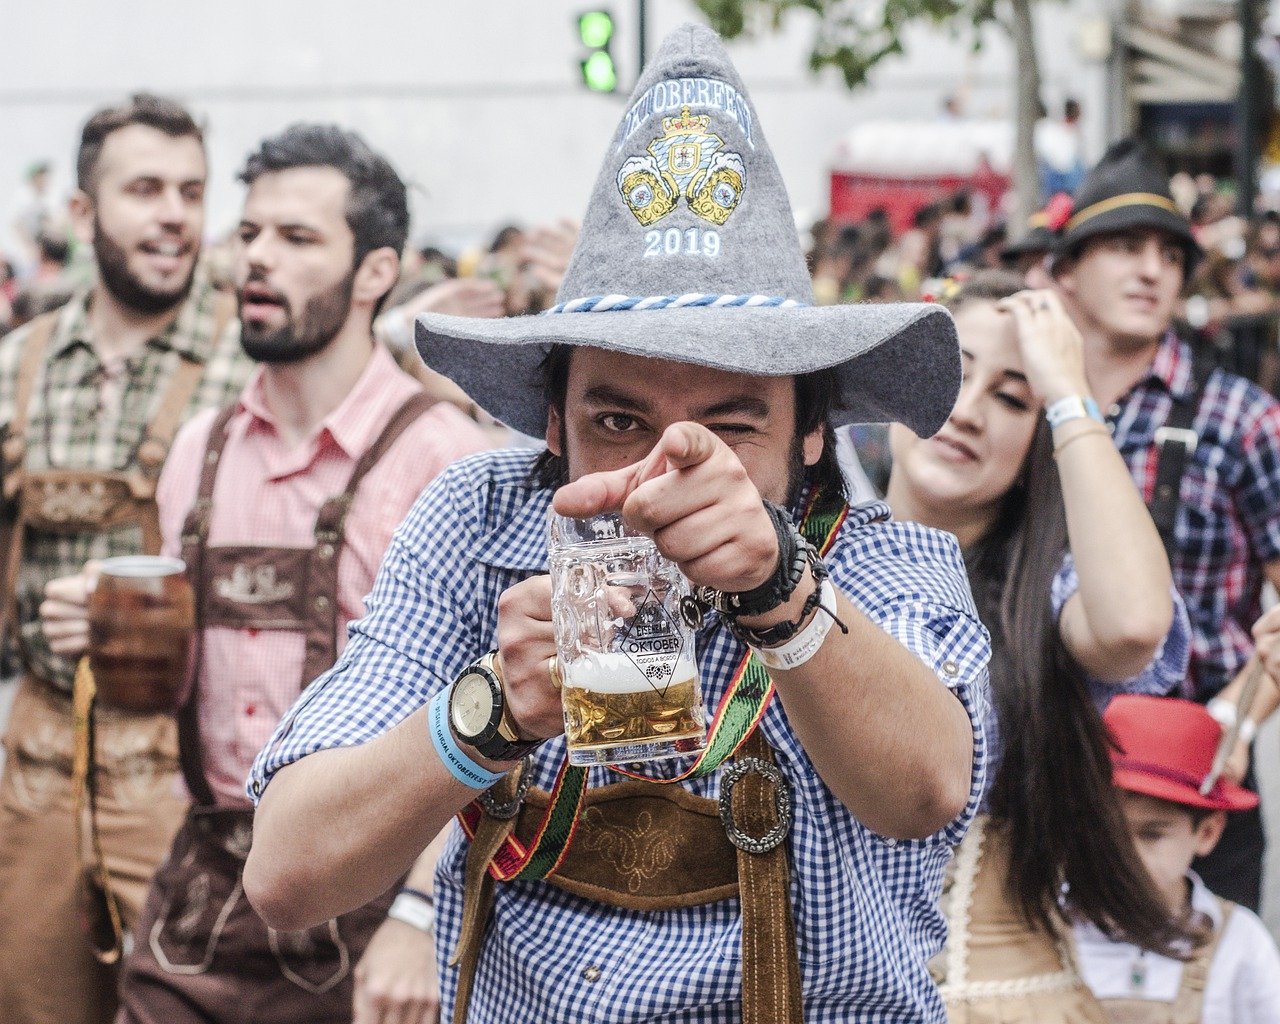 En mand i sydtysk outfit med et ølkrus i den ene hånd peger finger ad beskueren med den anden.